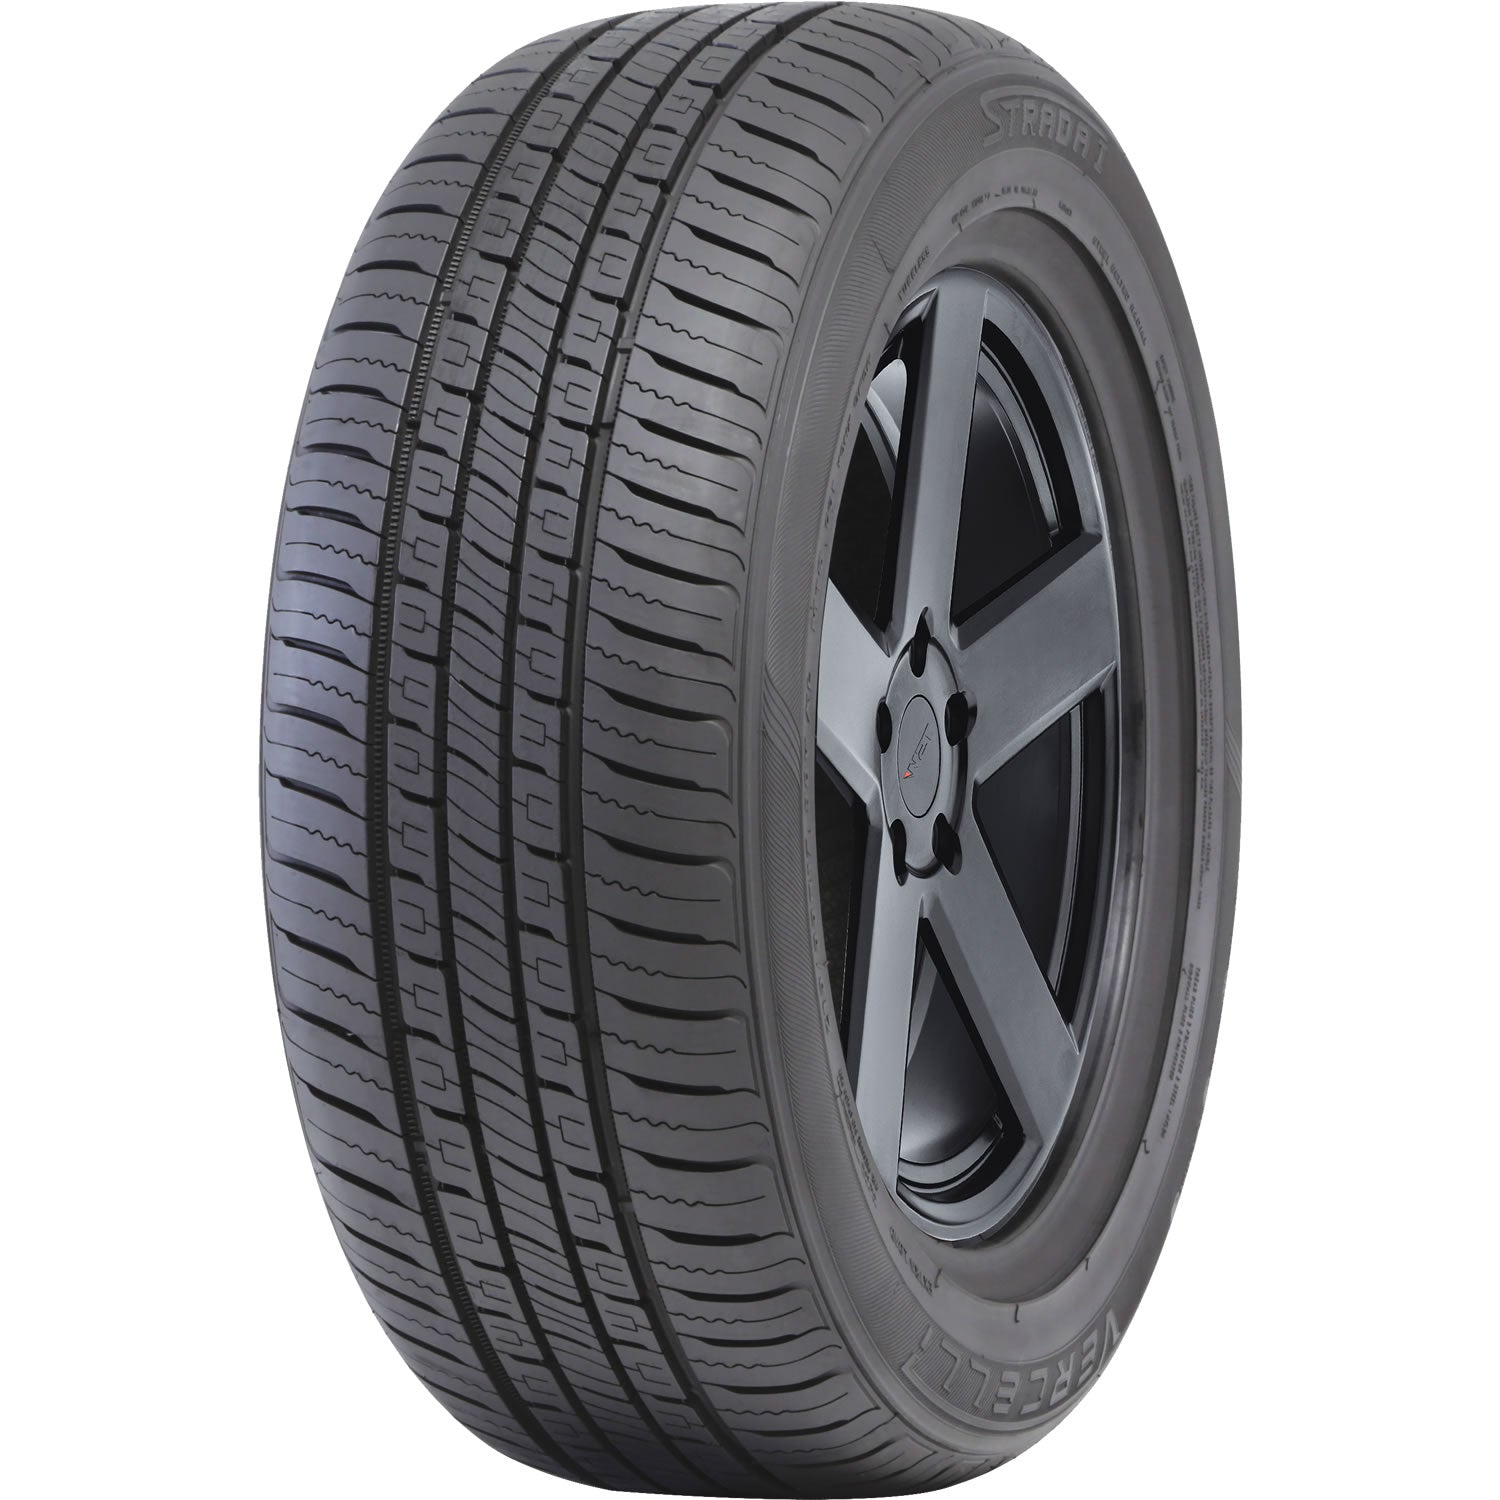 VERCELLI STRADA I 205/55R16 (24.9X8.1R 16) Tires